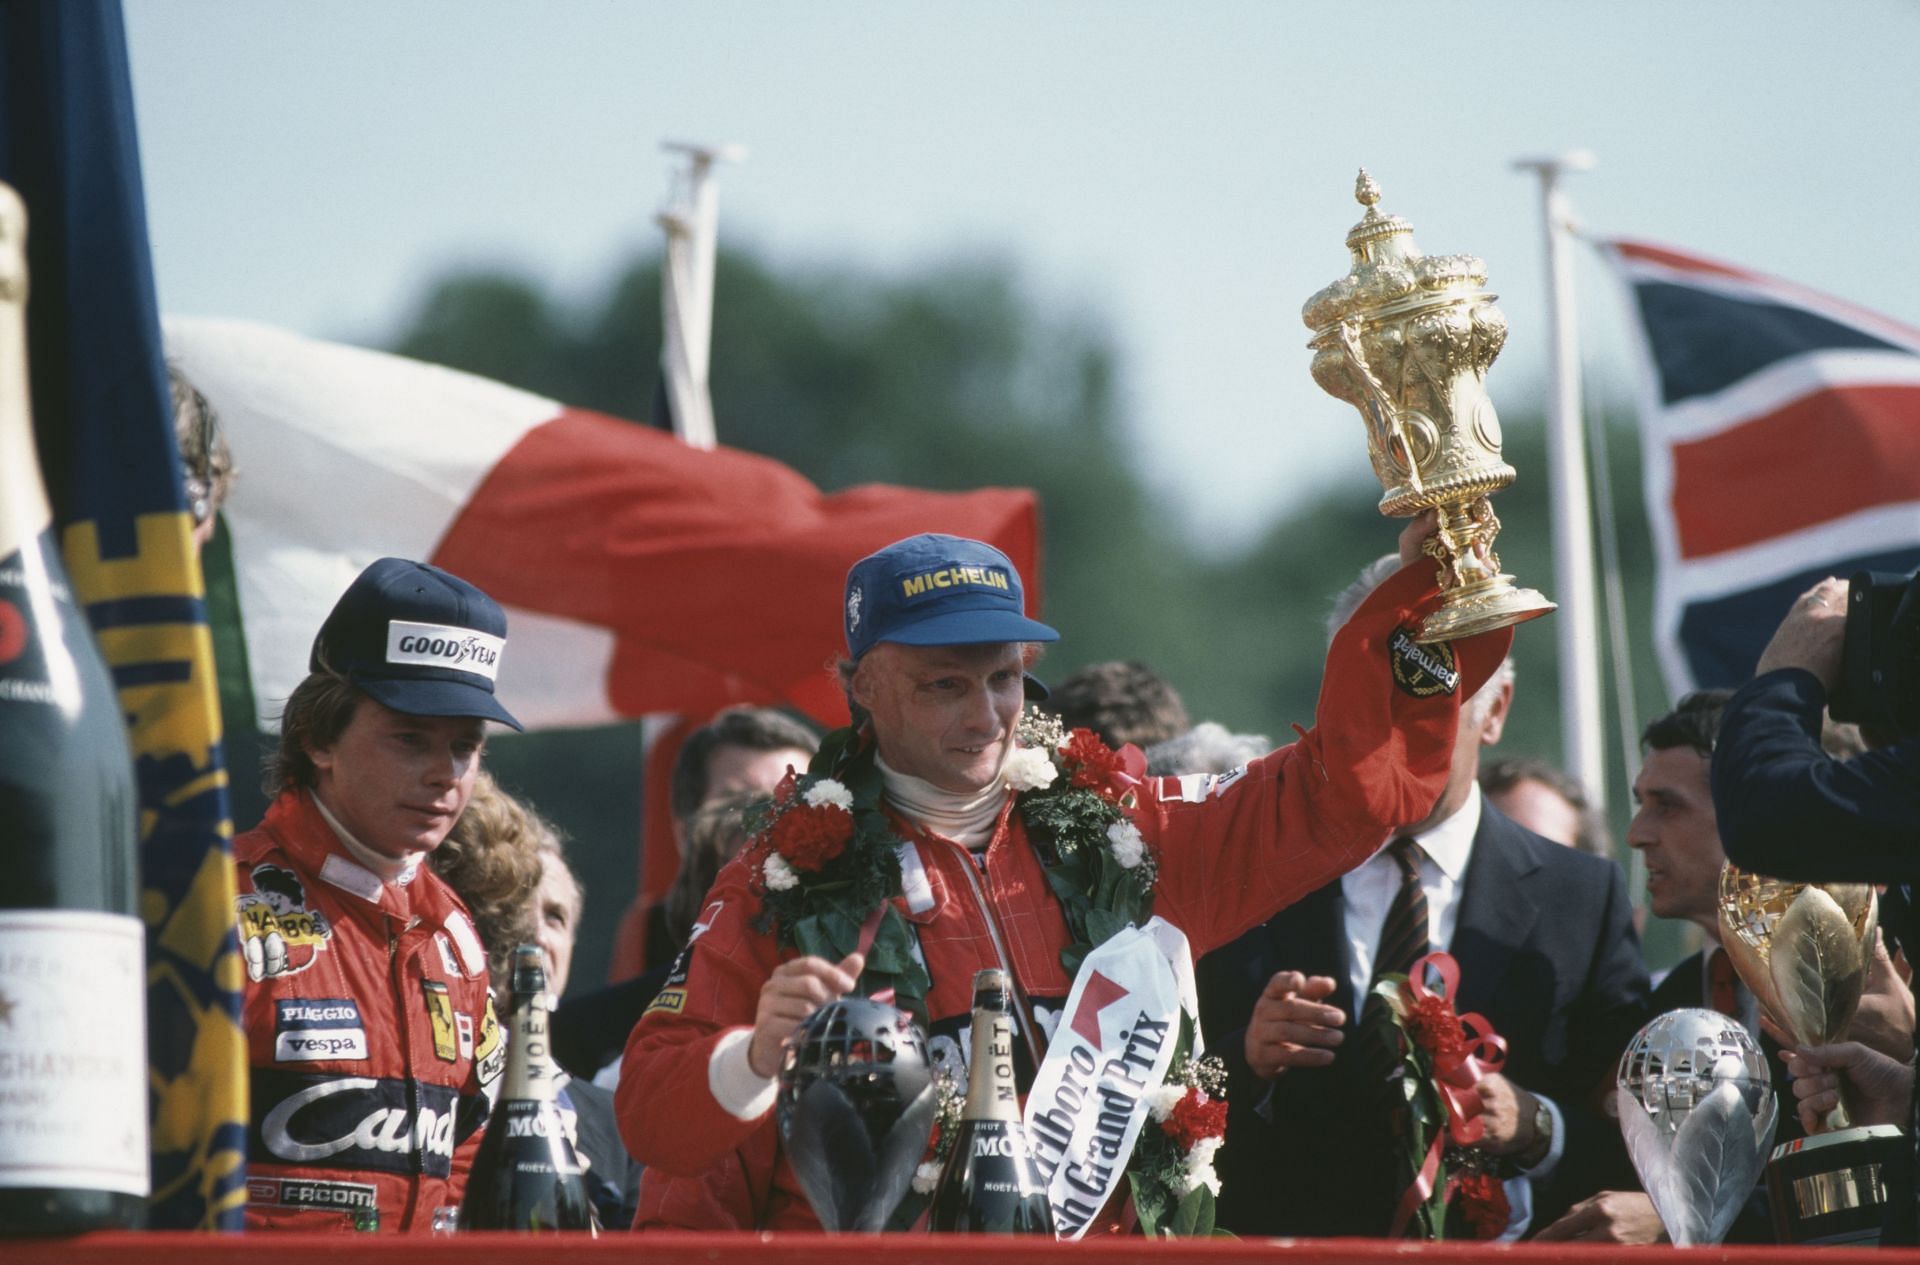 Niki Lauda refused to race at the Kyalami GP